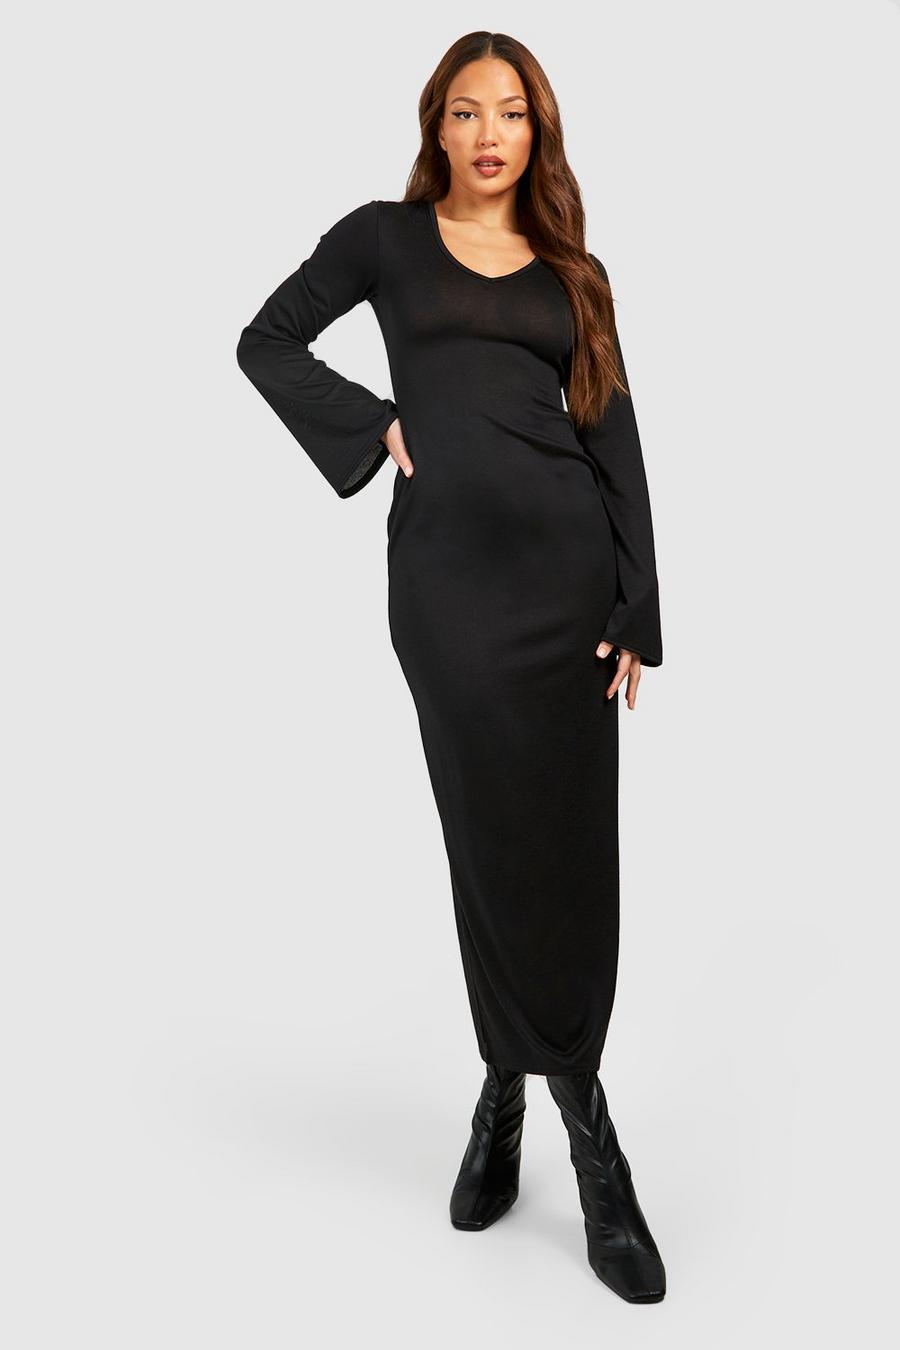 Black Tall Lightweight Knitted V Neck Flare Sleev Midaxi Dress